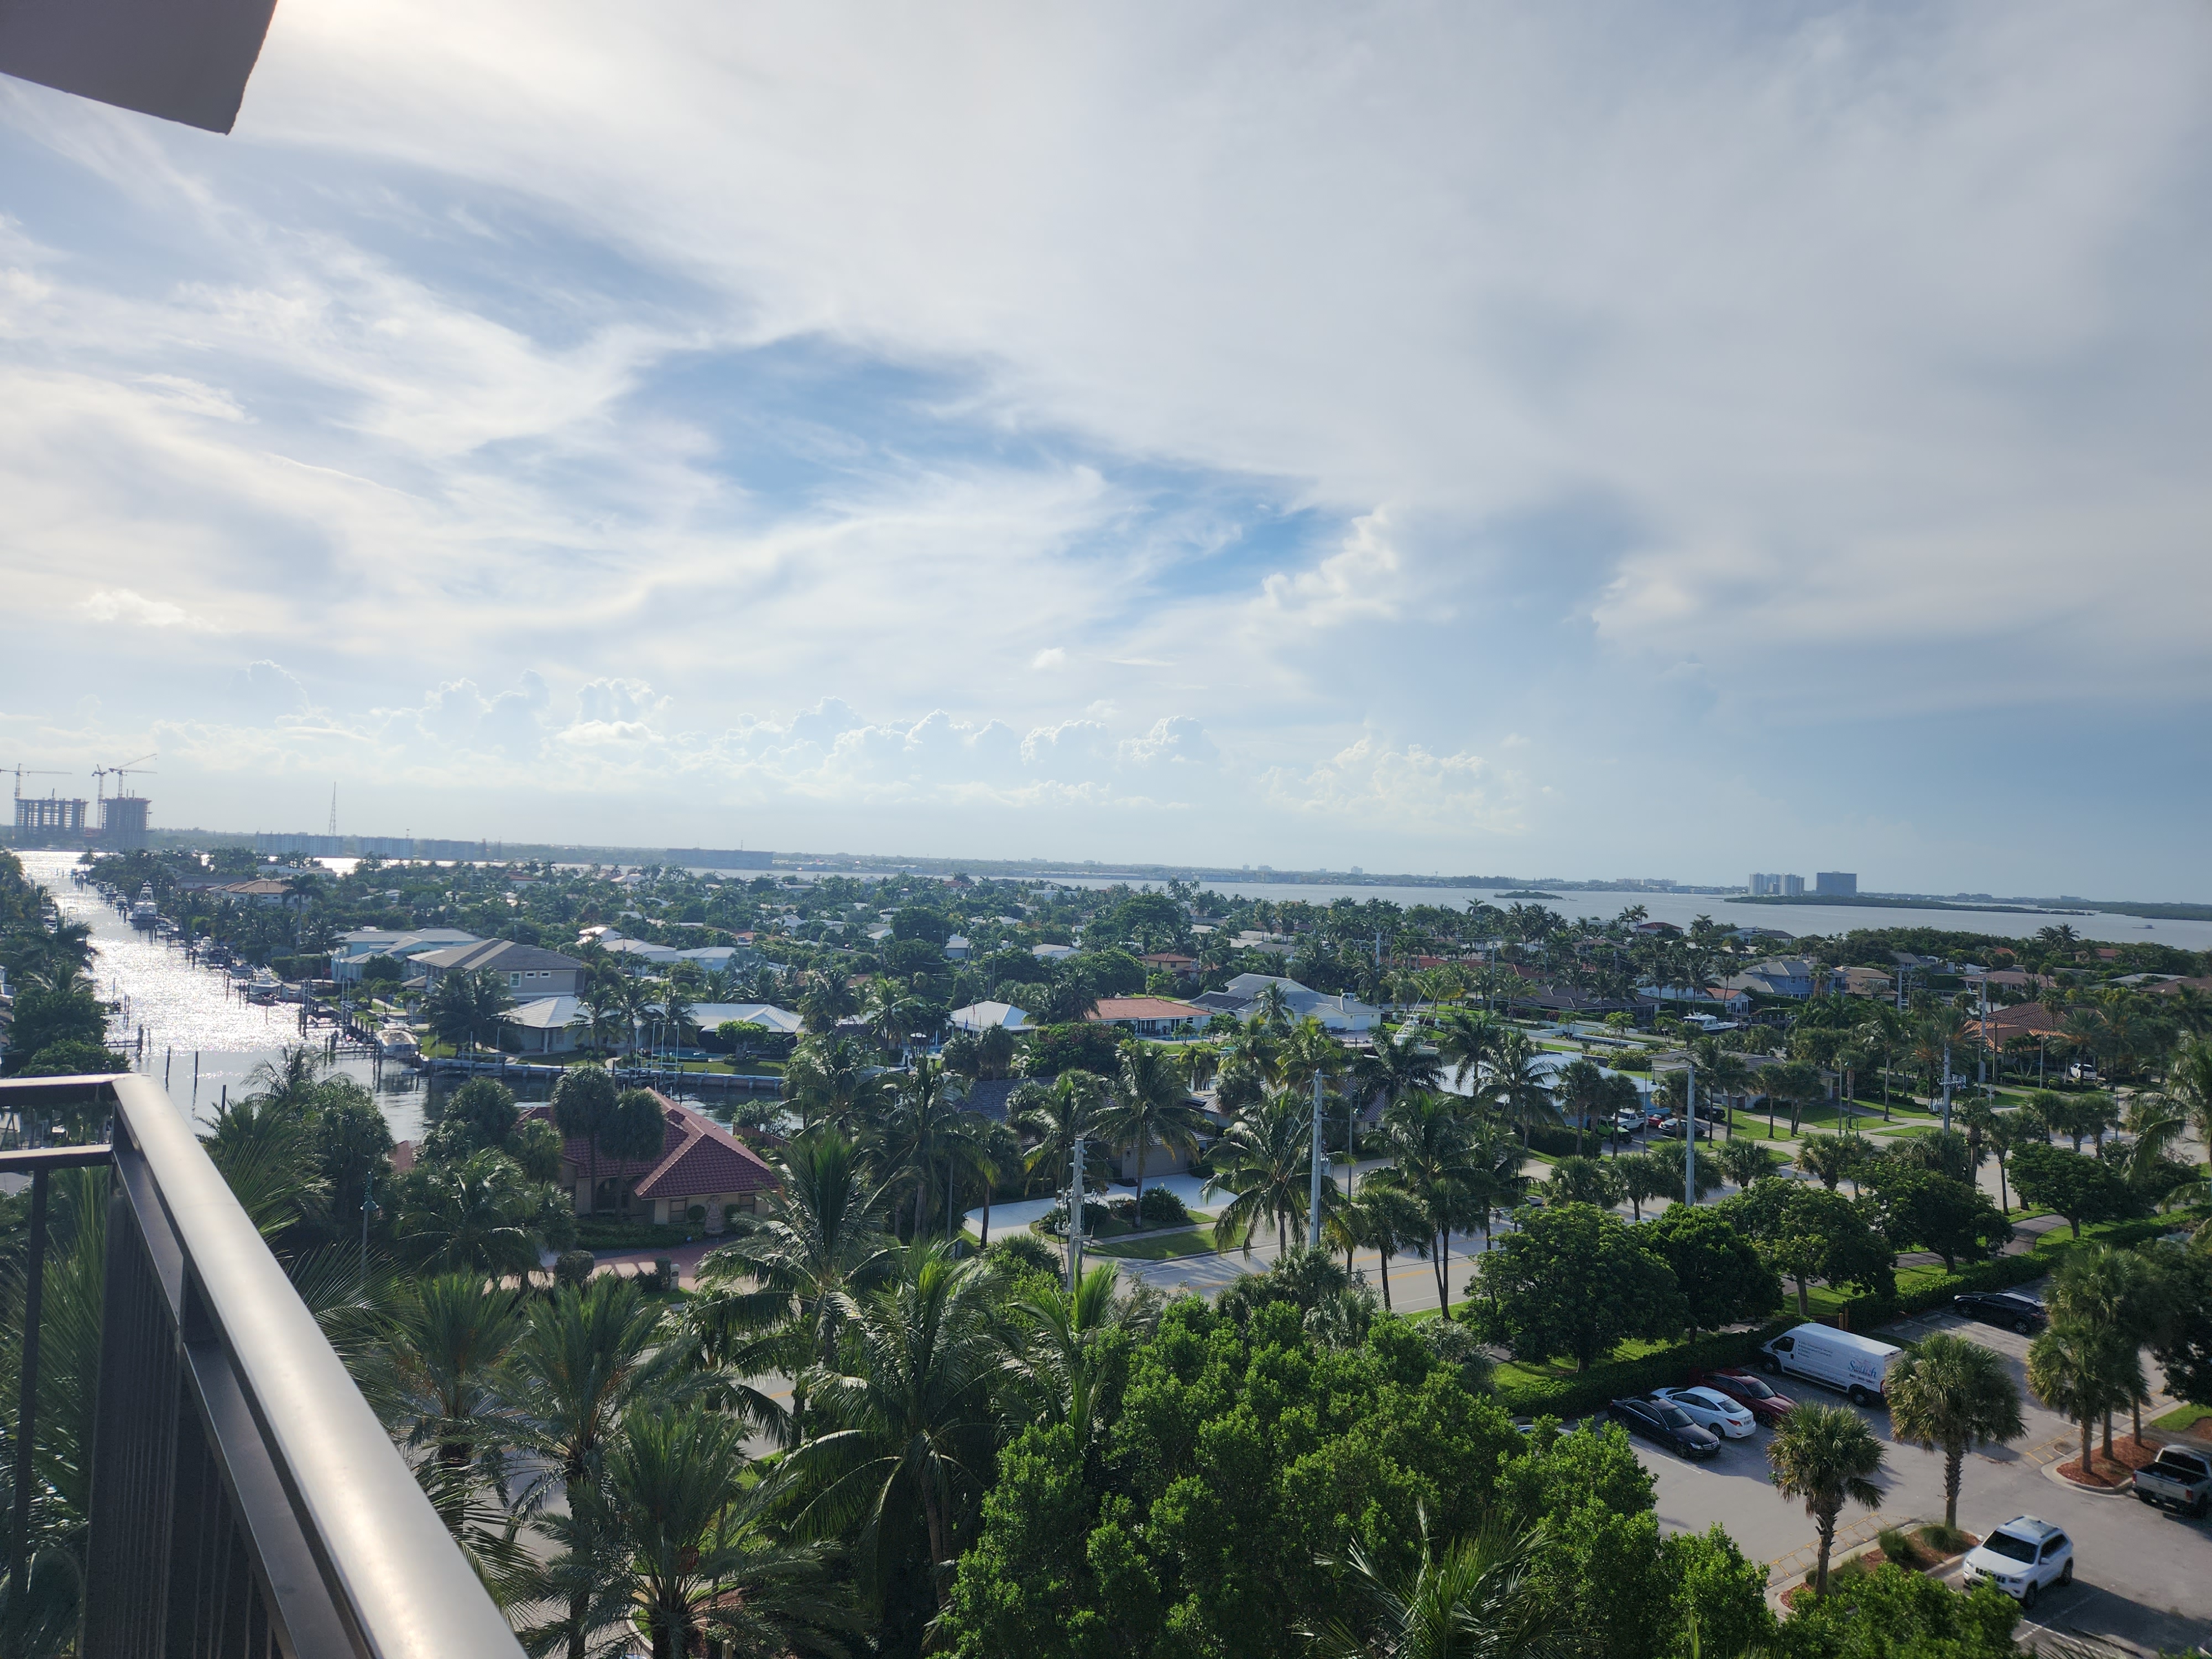 Crazy game with Antonio �� - Picture of Wyndham Grand Cancun All Inclusive  Resort & Villas - Tripadvisor